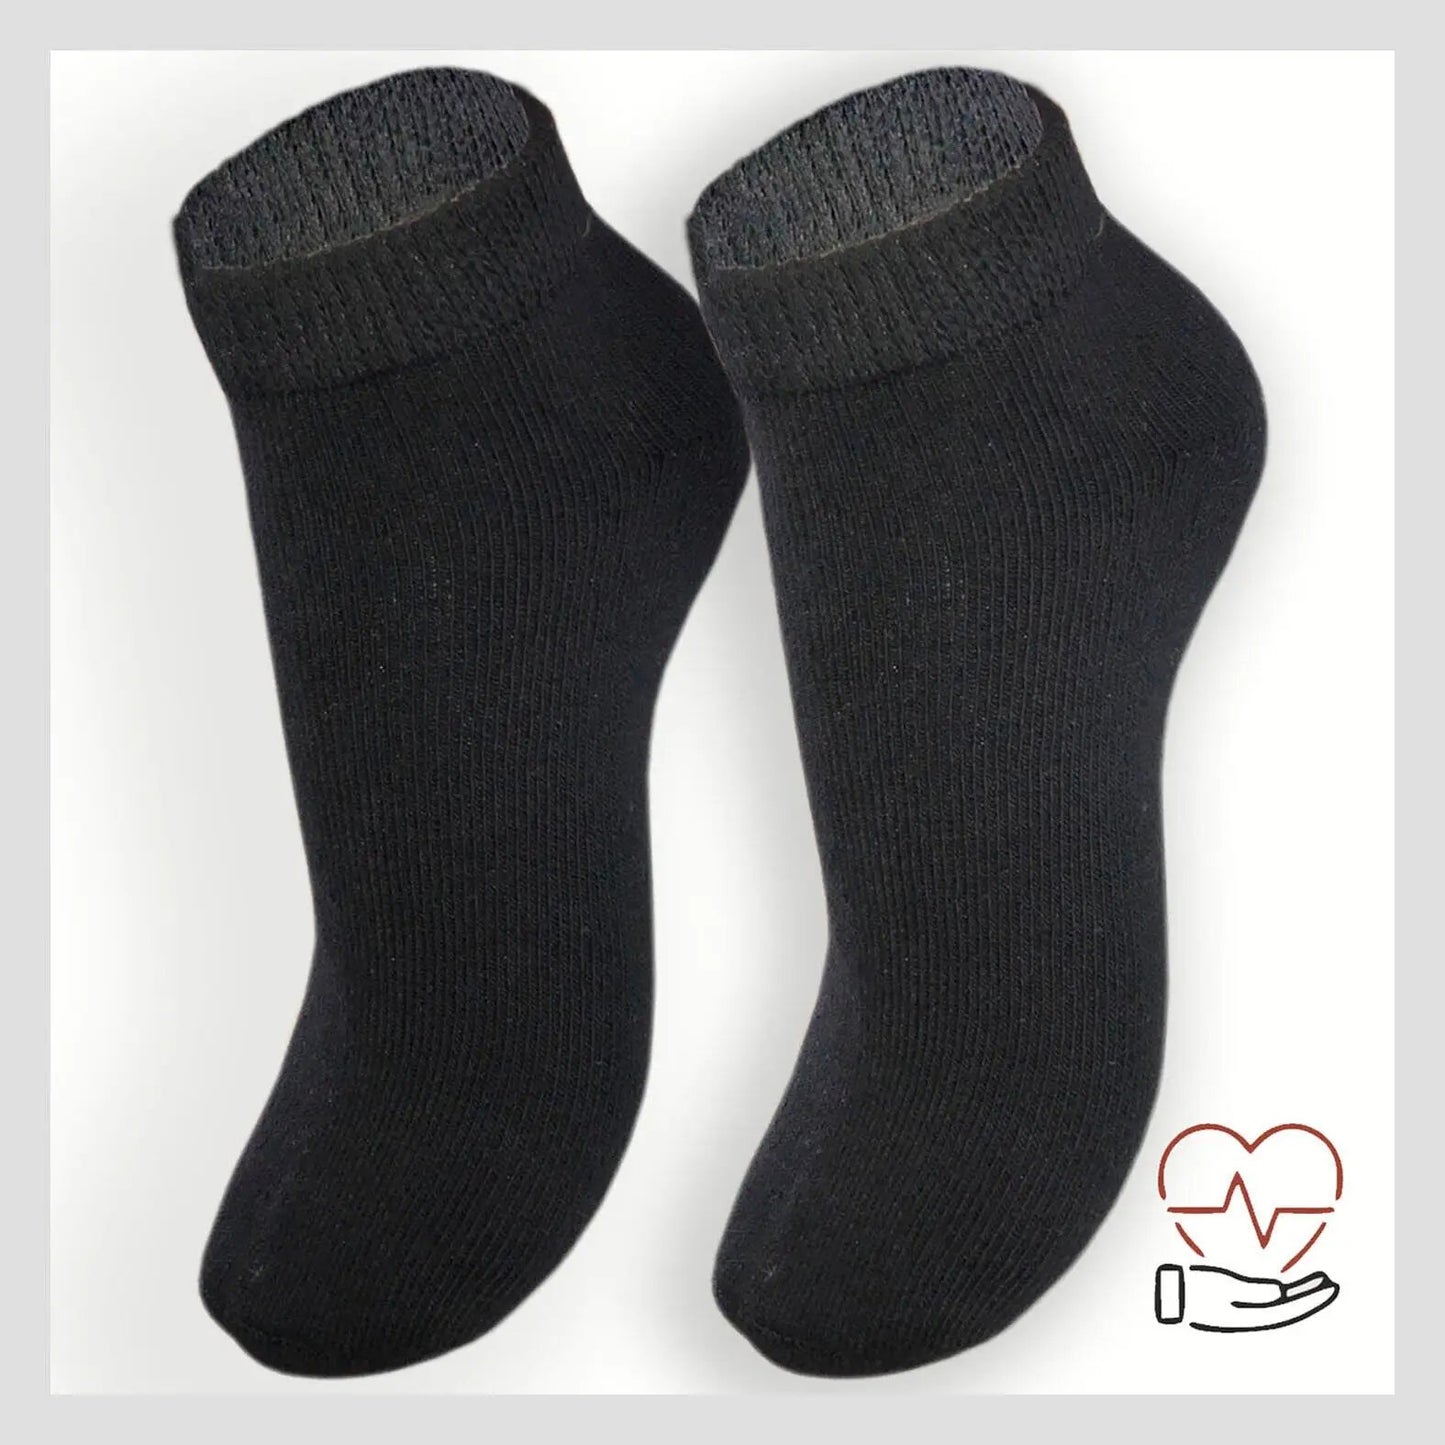 3 o 6 pares de calcetines deportivos blancos o negros diseñados para diabéticos 